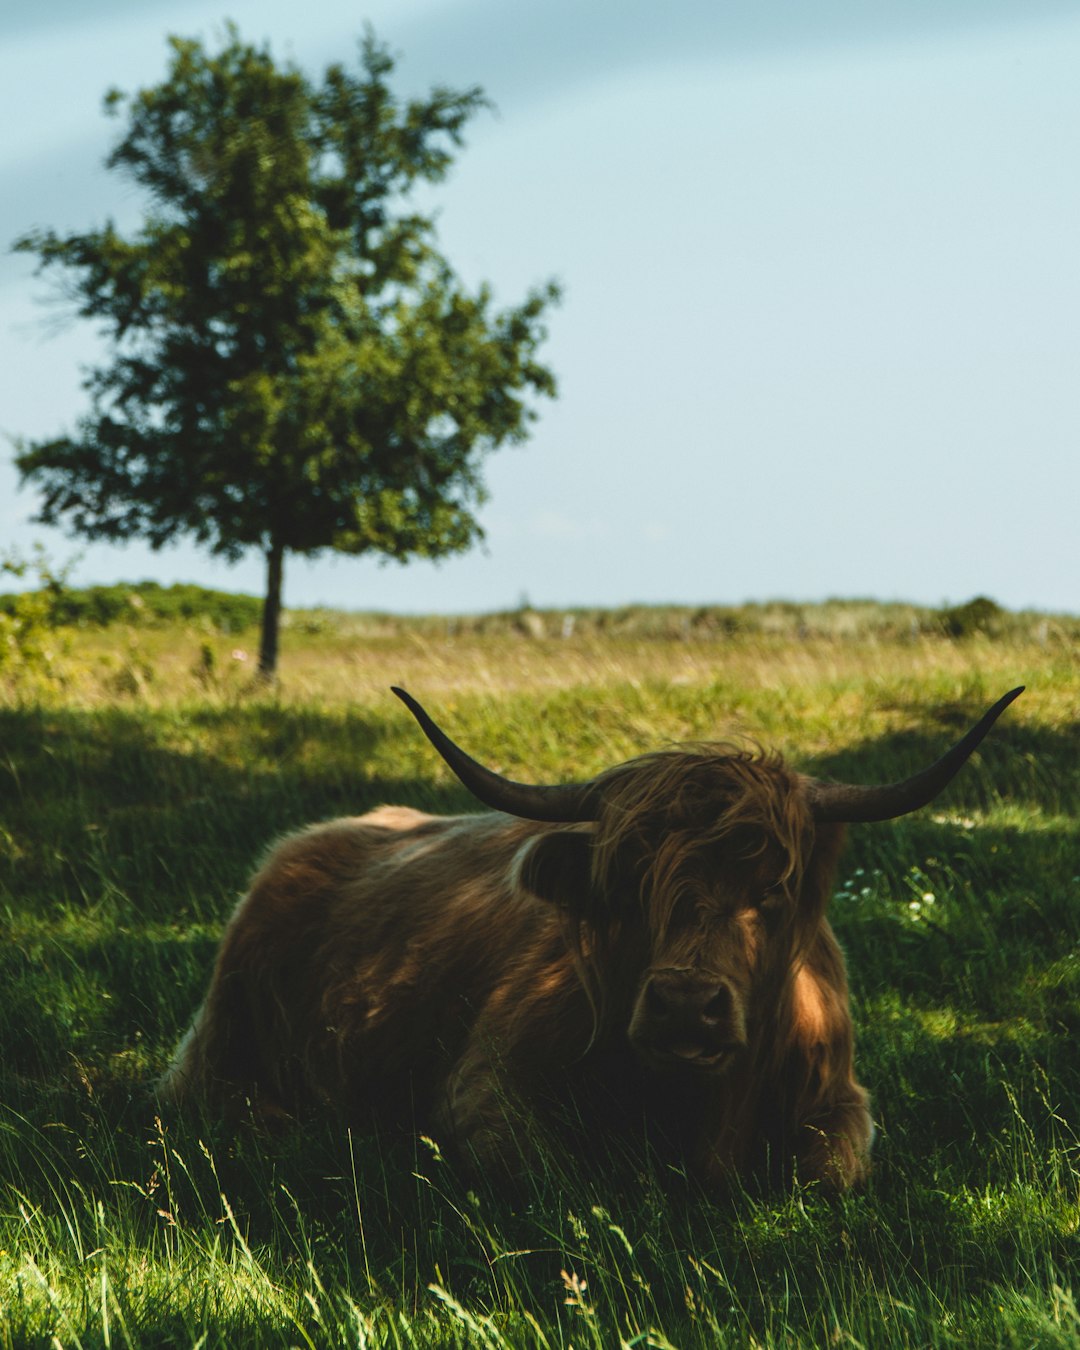 brown yak on green grass field during daytime